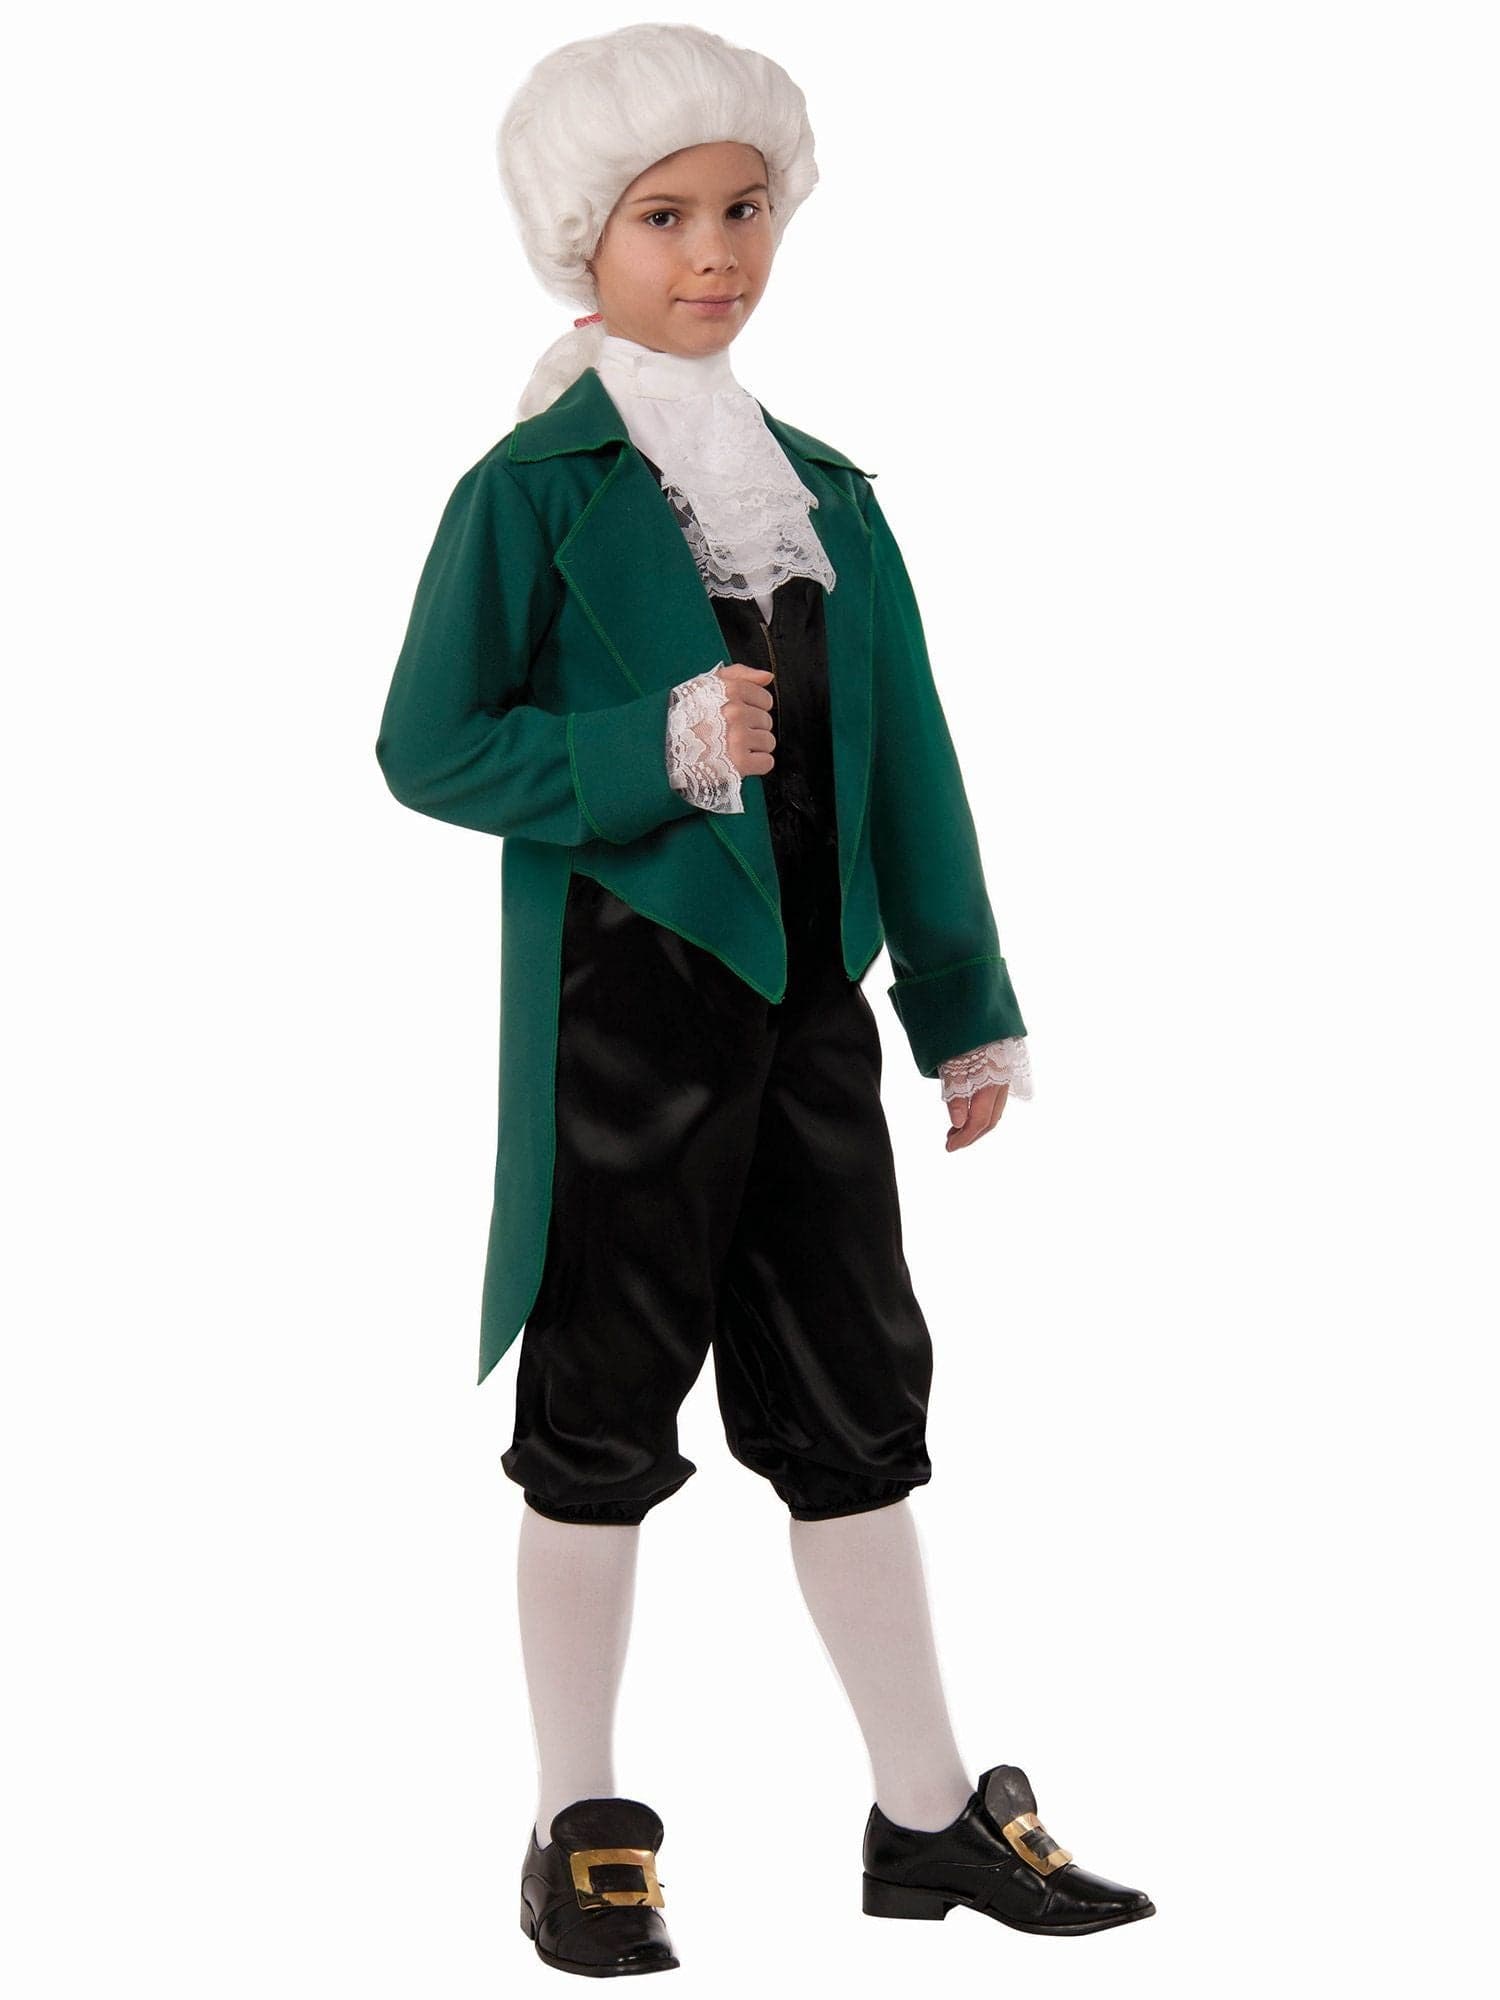 Kid's Thomas Jefferson Costume - costumes.com